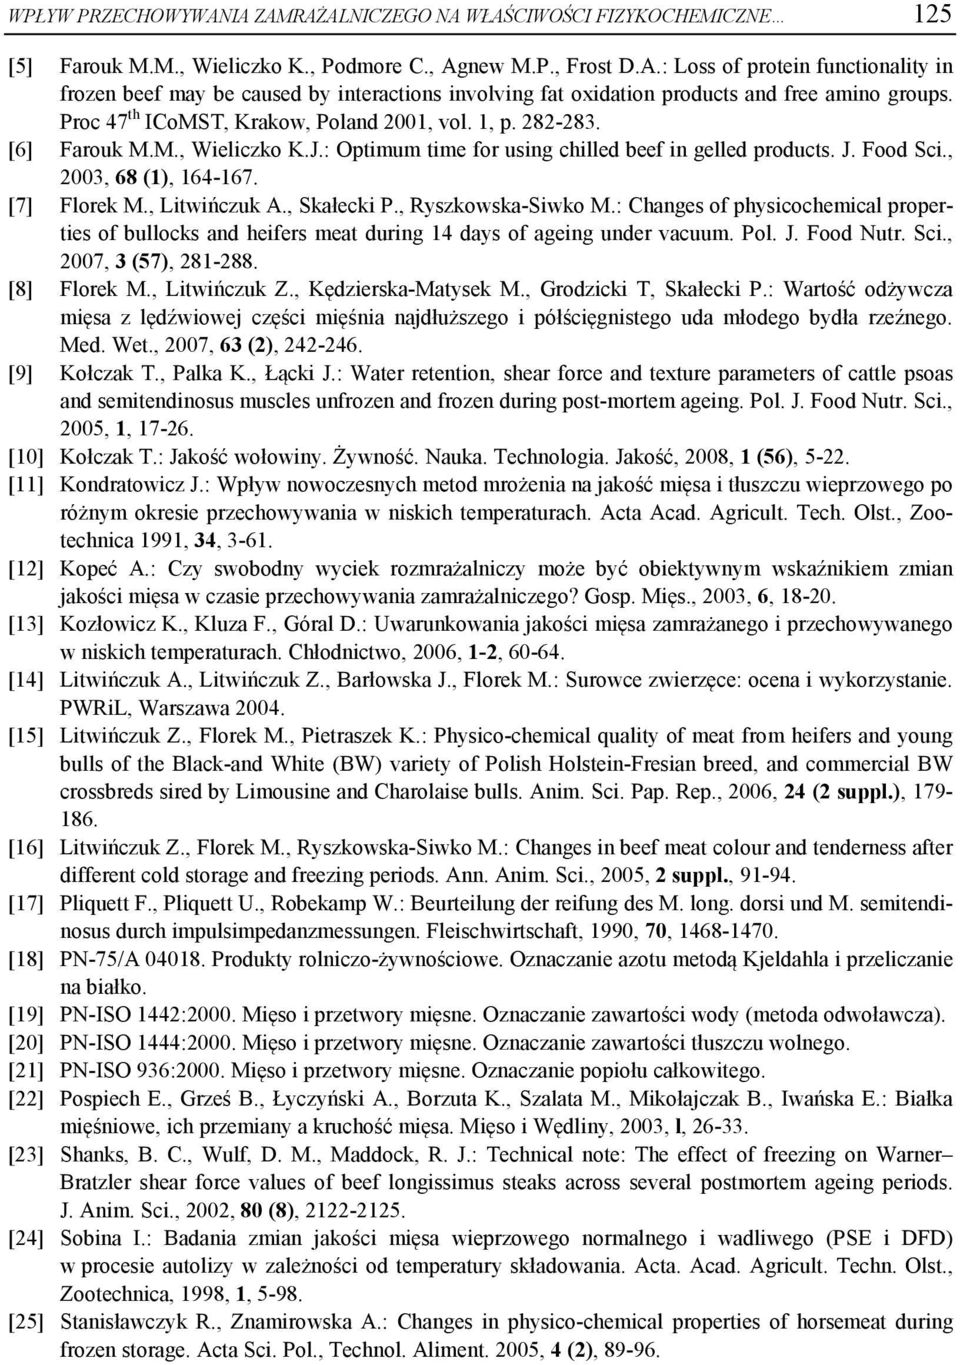 , Litwińczuk A., Skałecki P., Ryzkowka-Siwko M.: Change of phyicochemical propertie of bullock and heifer meat during 14 day of ageing under vacuum. Pol. J. Food Nutr. Sci., 2007, 3 (57), 281-288.